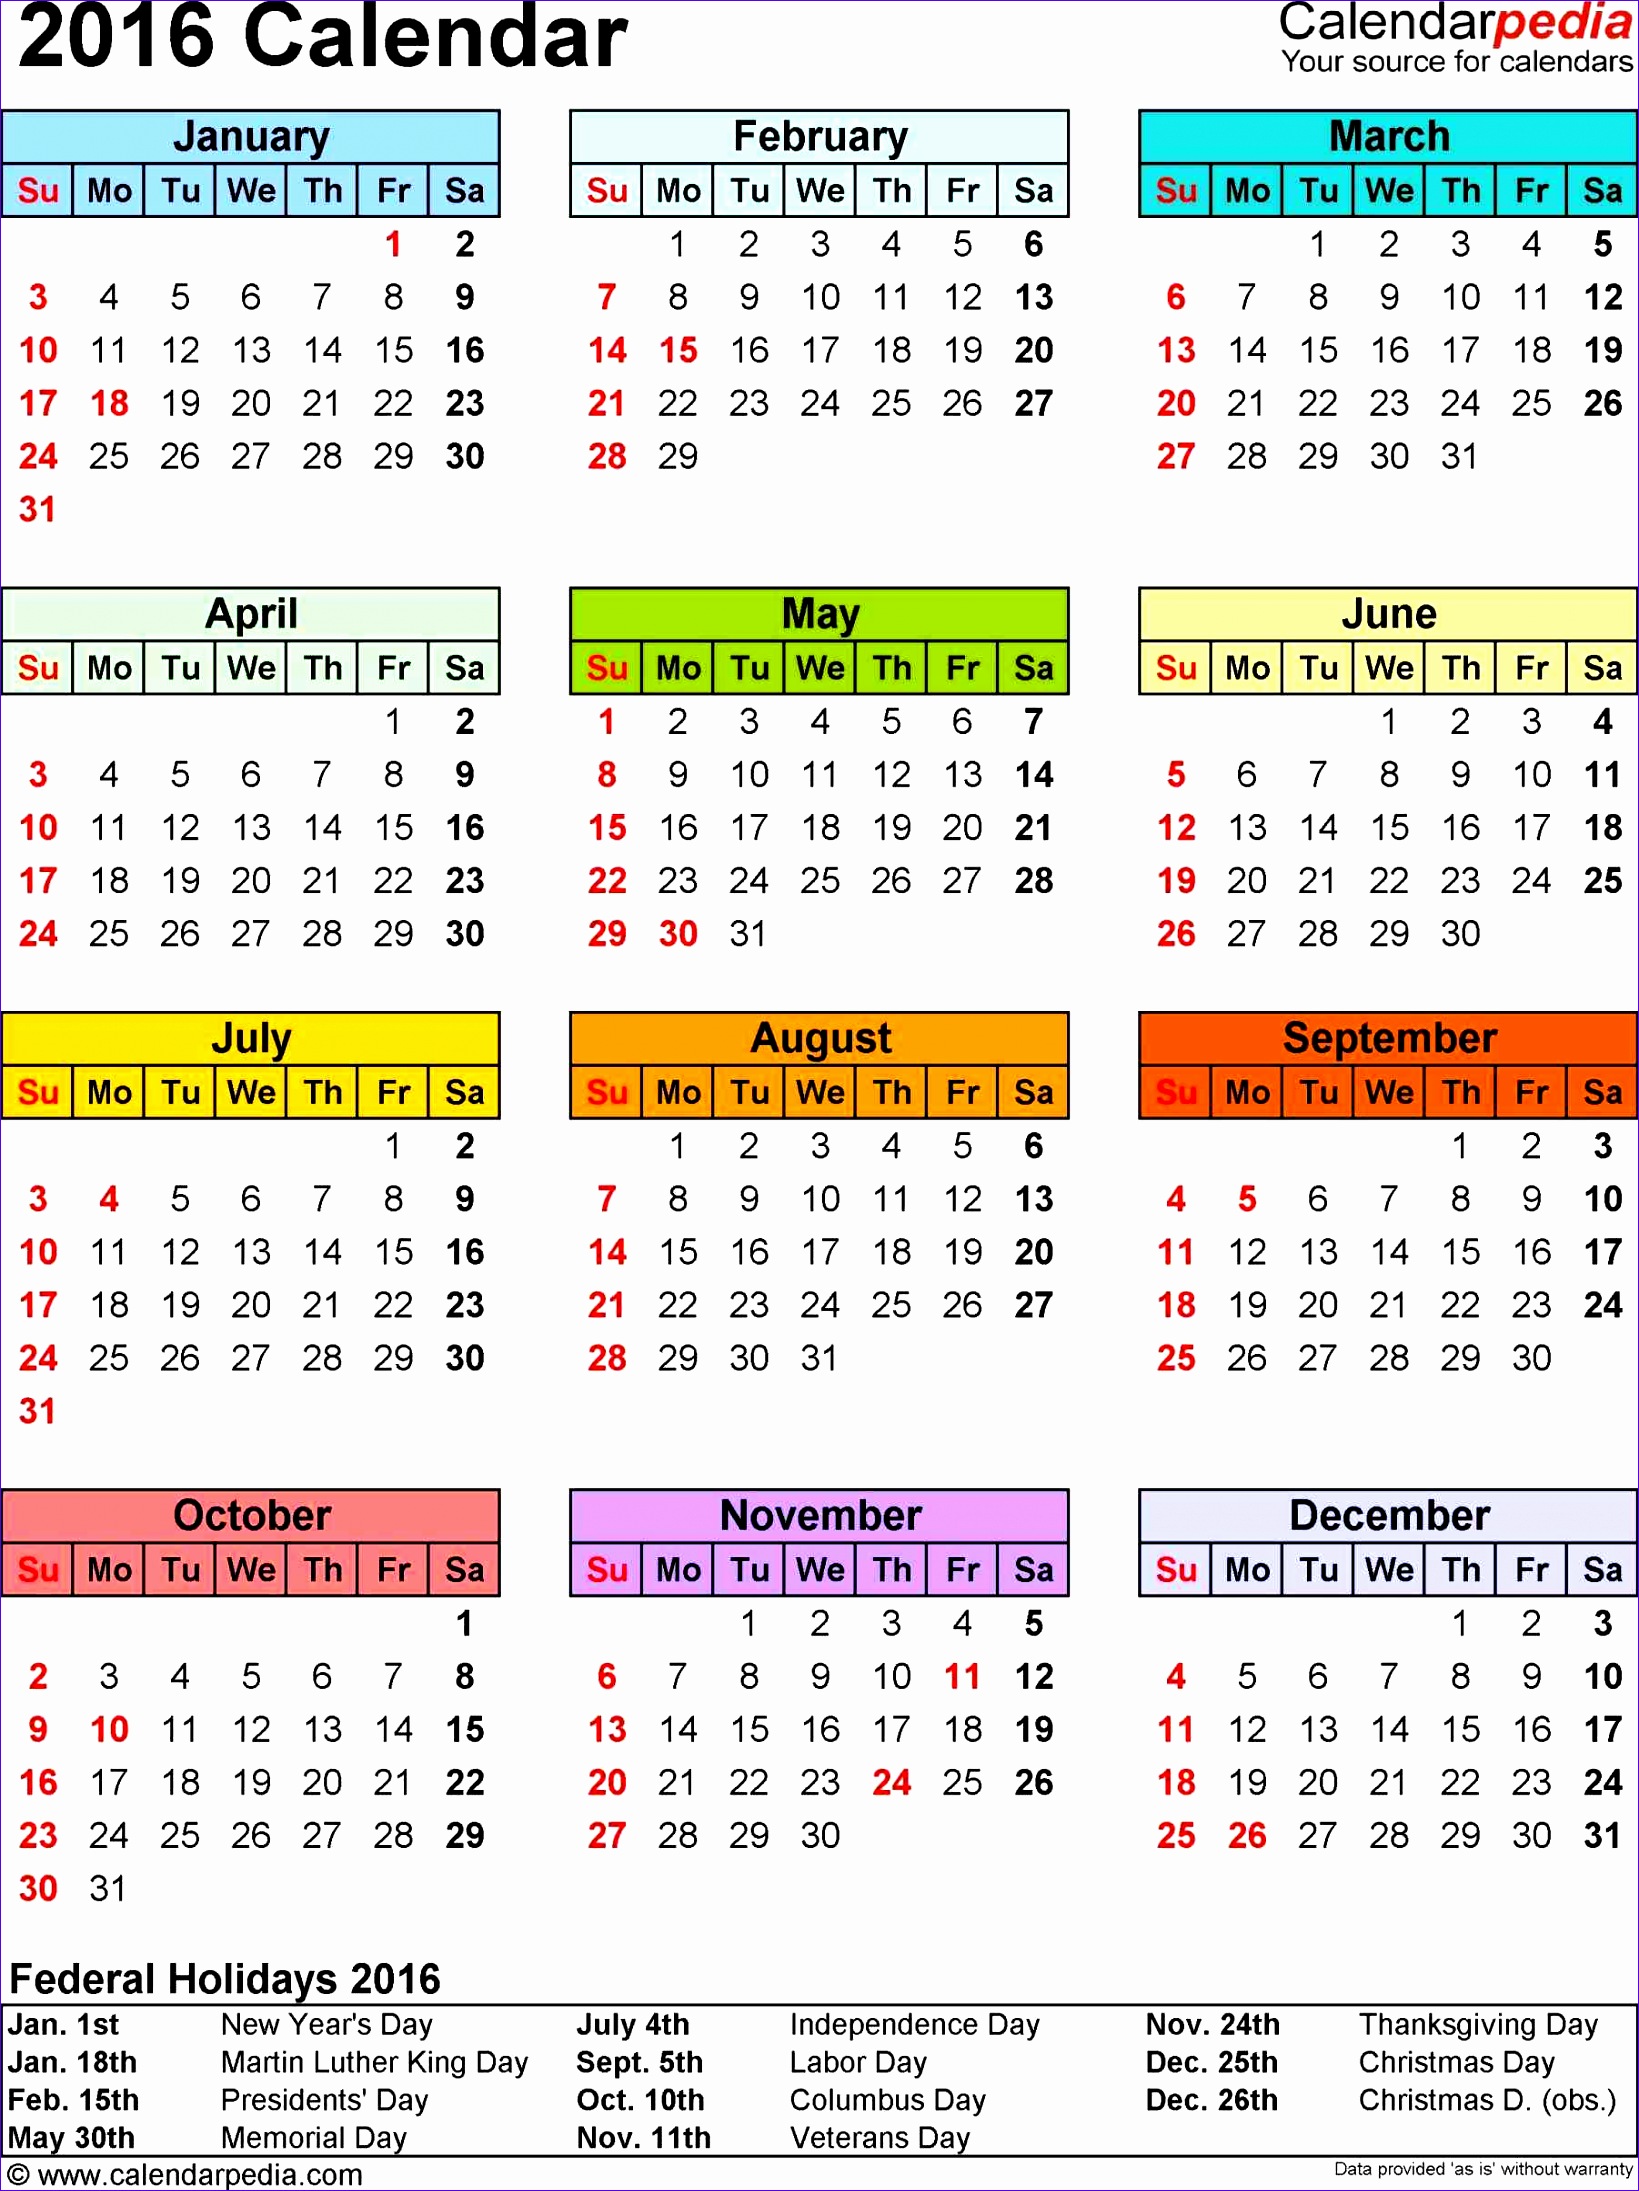 work schedule templates for word time management weekly u pinteresu time 24 Hour Work Schedule Template Excel management weekly schedule template u